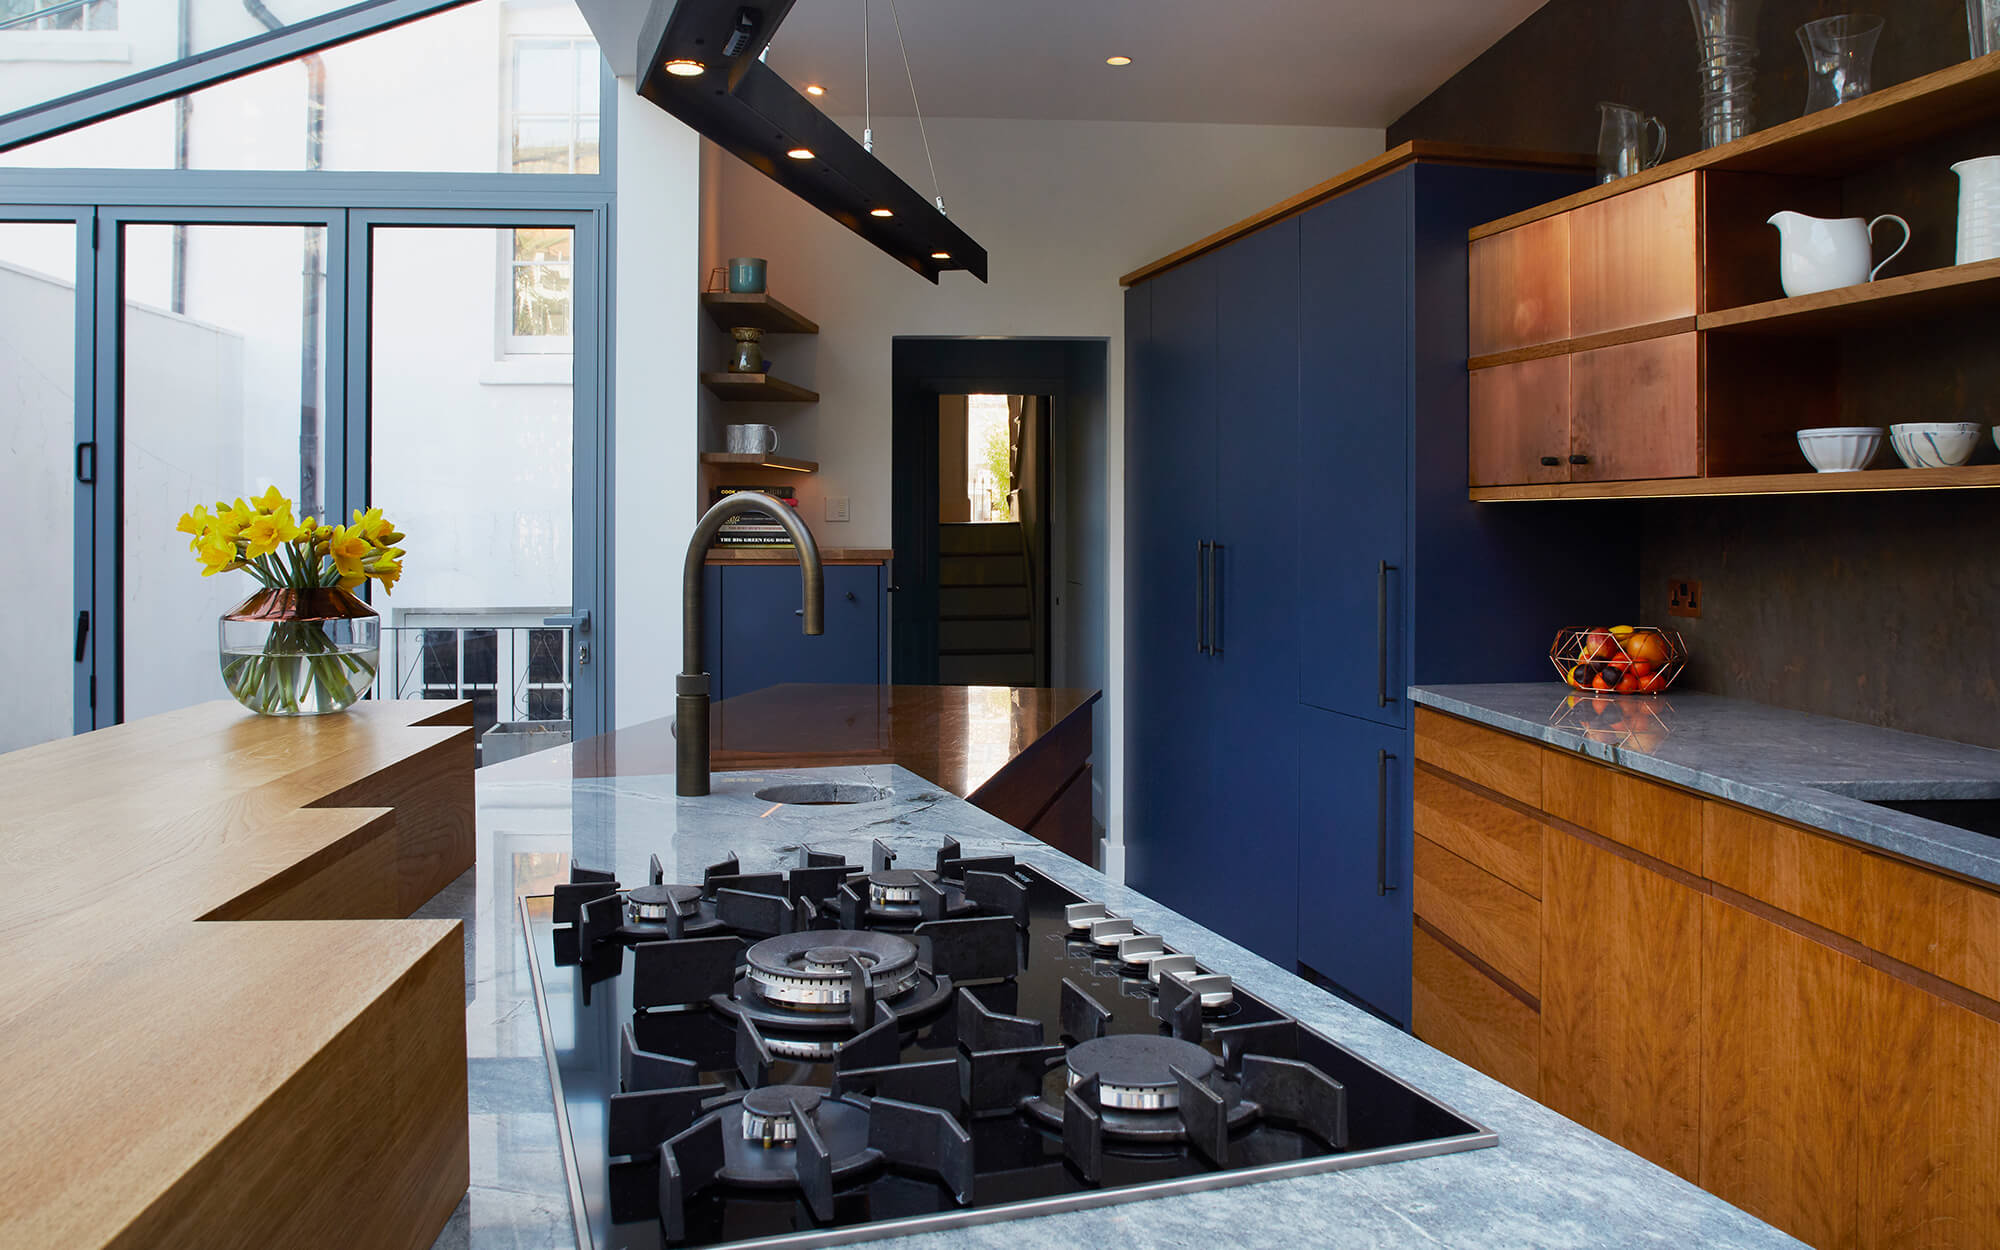 A fun ergonomic family kitchen with concrete counter tops by Splinterworks